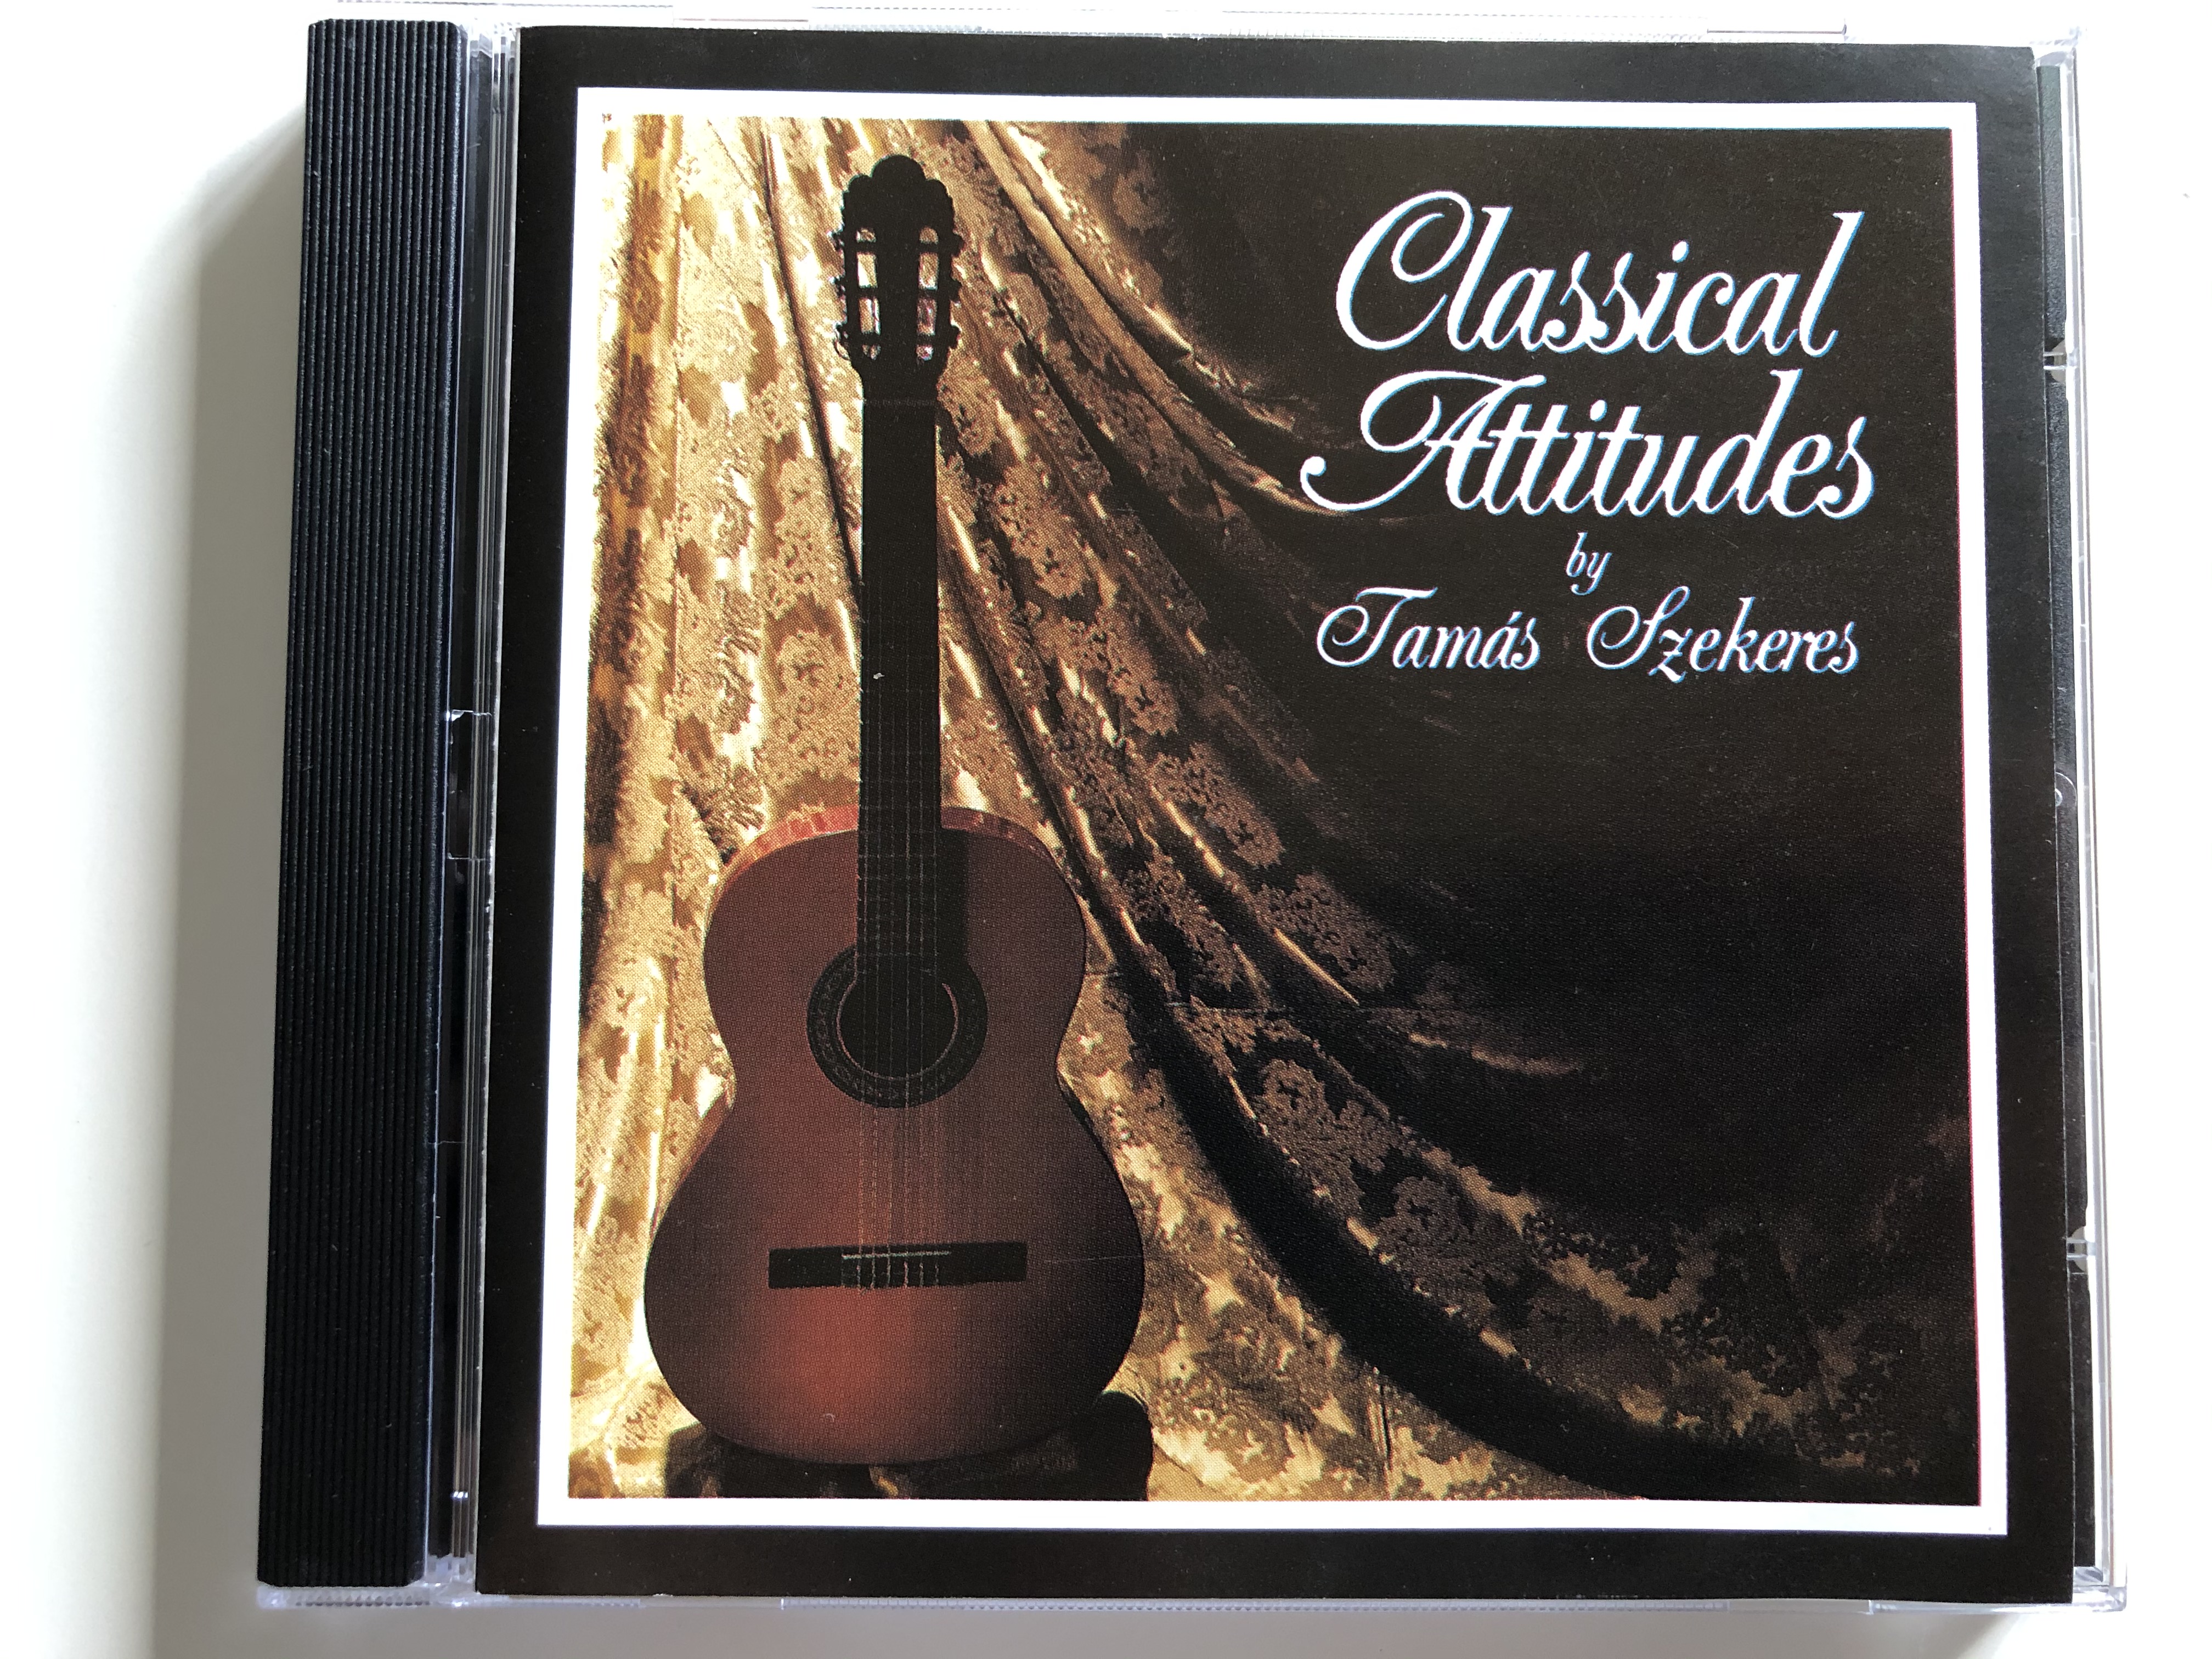 classical-attitudes-by-tam-s-szekeres-mega-audio-cd-1993-hcd-37690-1-.jpg